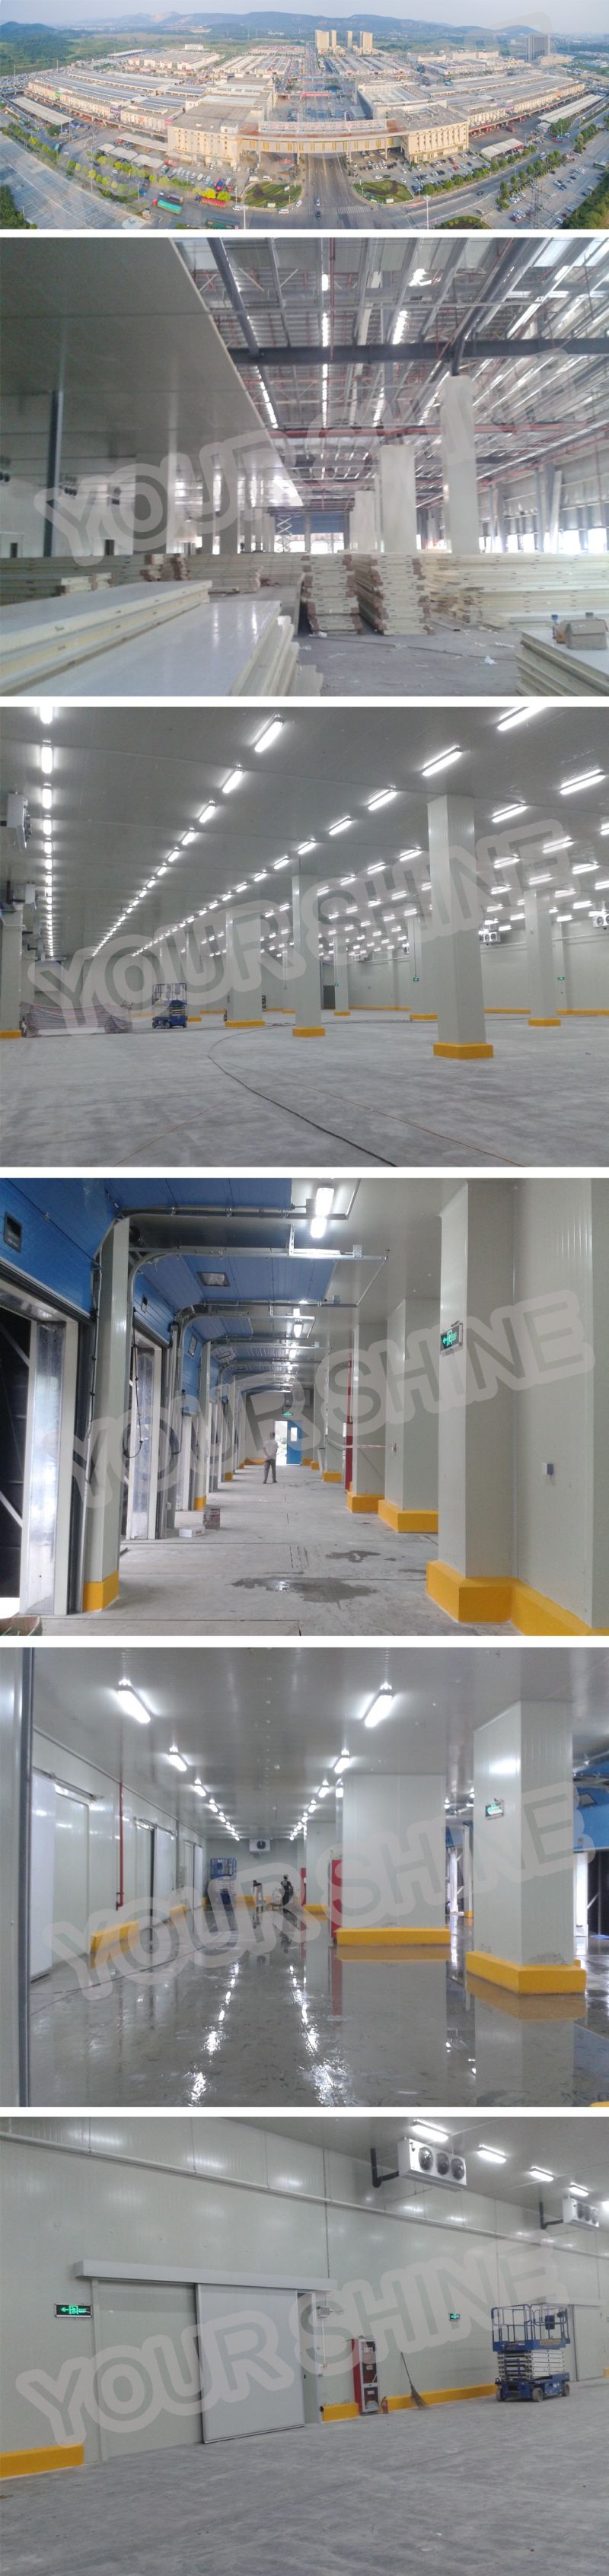 Changzhou Yourshine 100mm Insulated PU Polyurethane Cold Room Panels